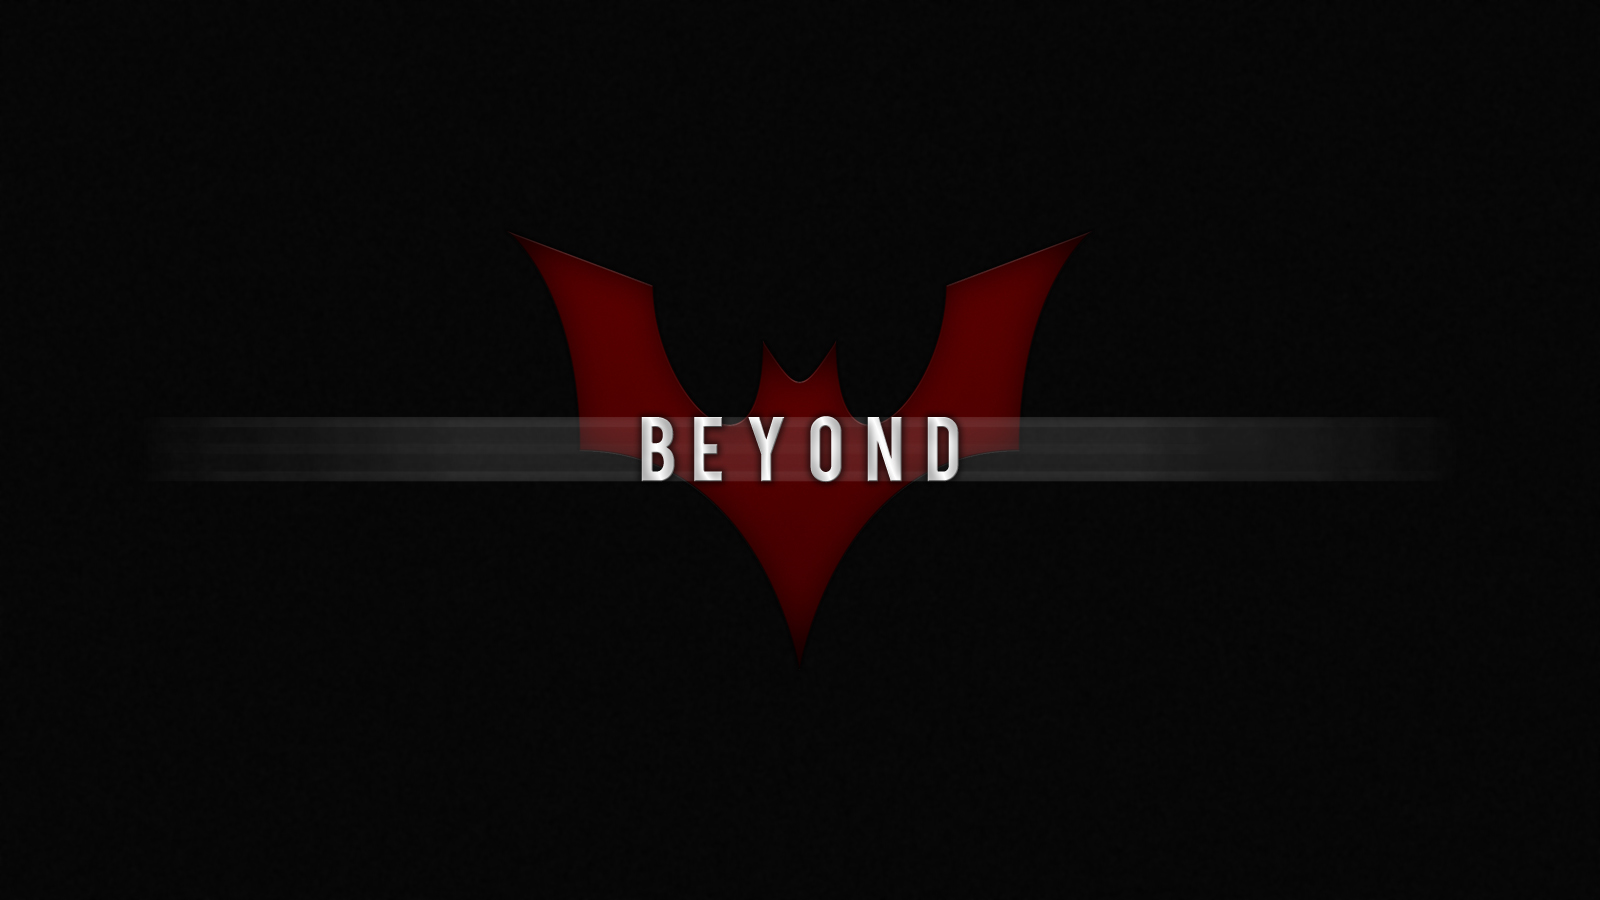 Batman Beyond Wallpaper HD - WallpaperSafari